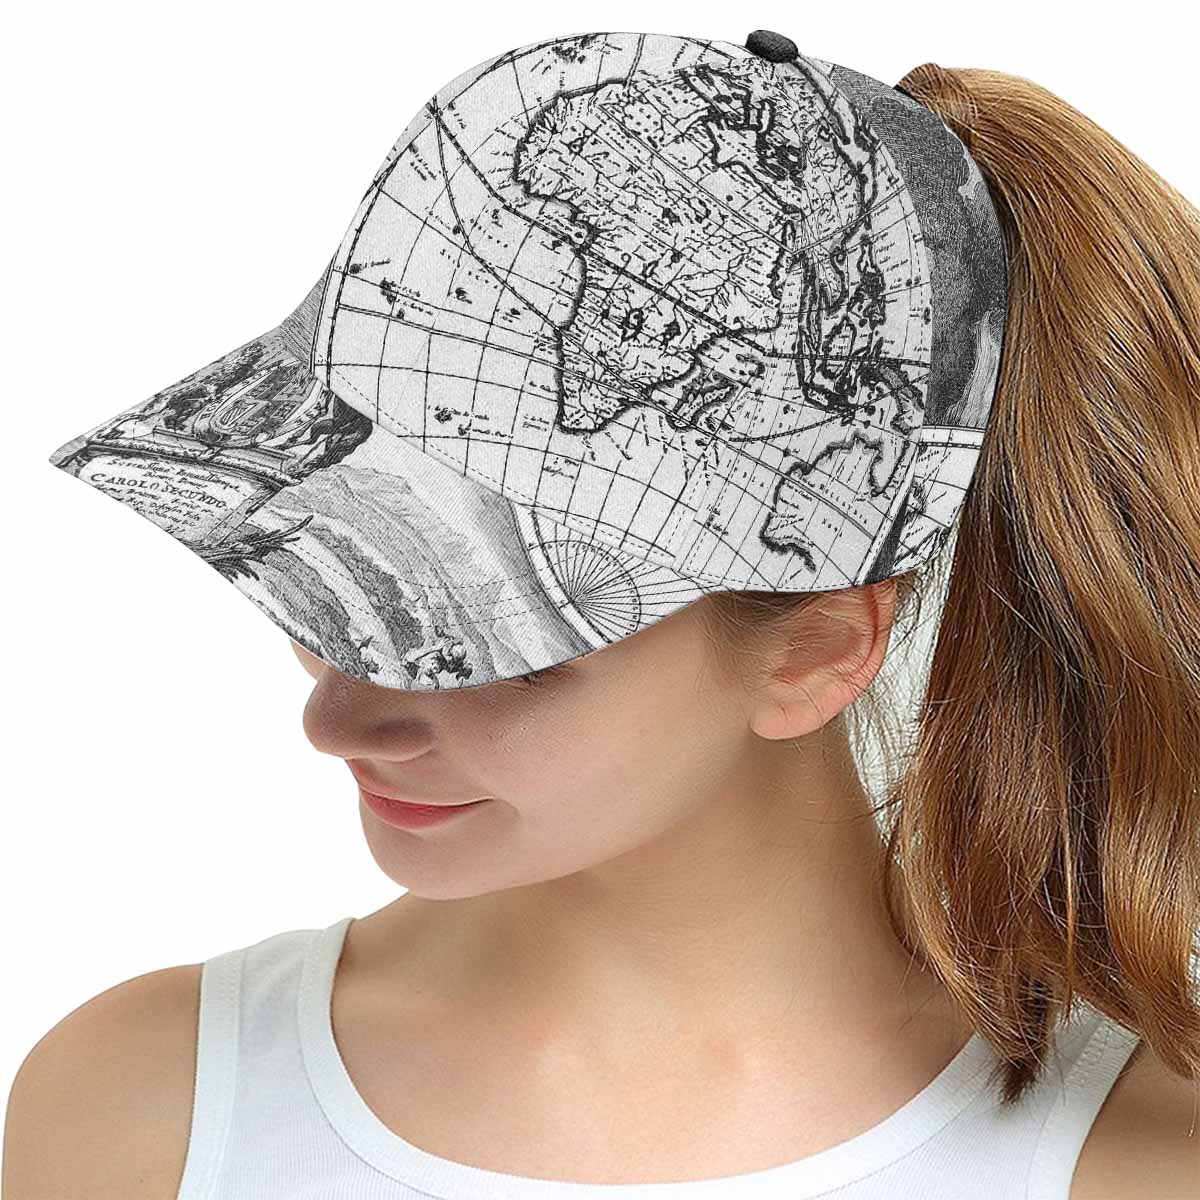 Antique Map design mens or womens deep snapback cap, trucker hat, Design 17